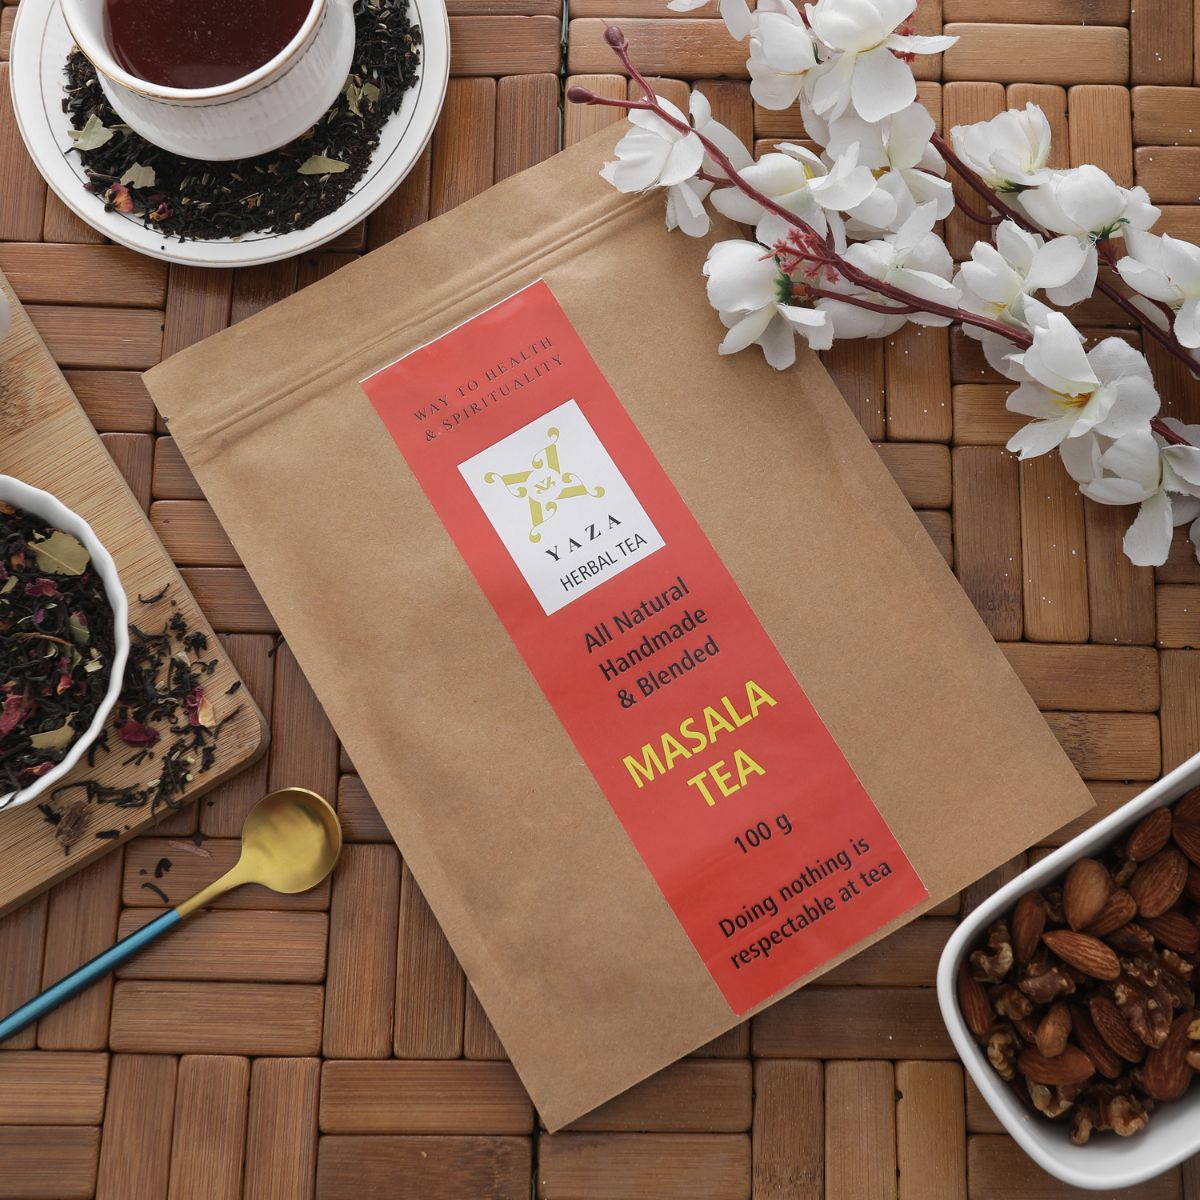 Yaza Masala Tea-The Ultimate Energizer - hfnl!fe